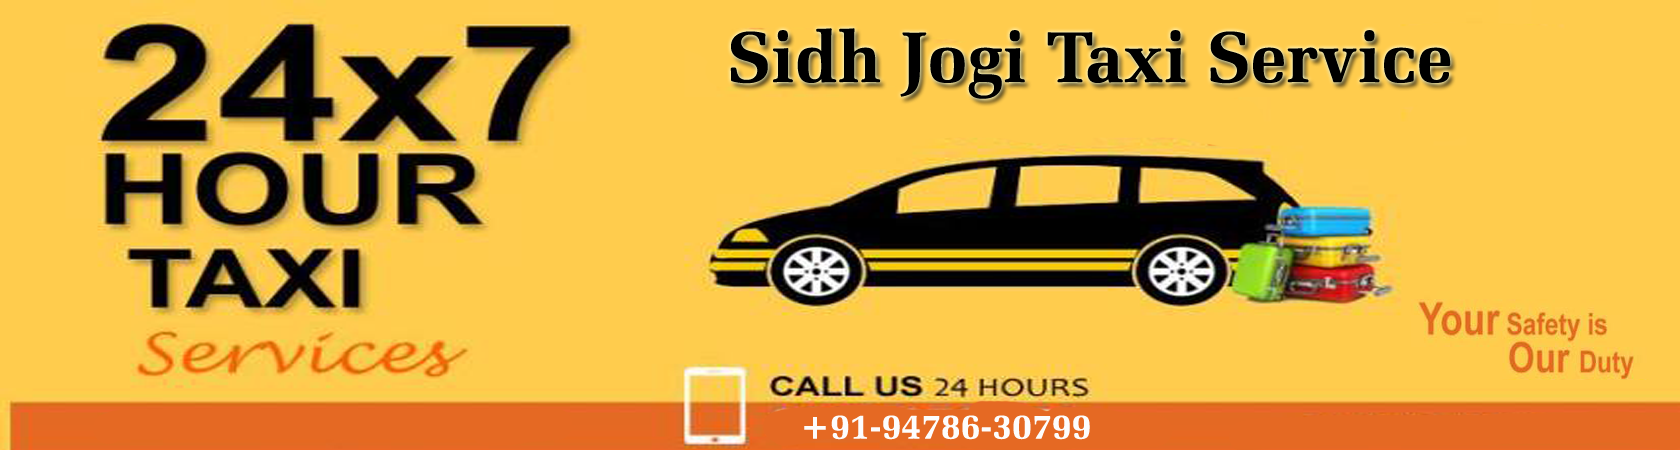 Taxi service | Taxi service in jalandhar